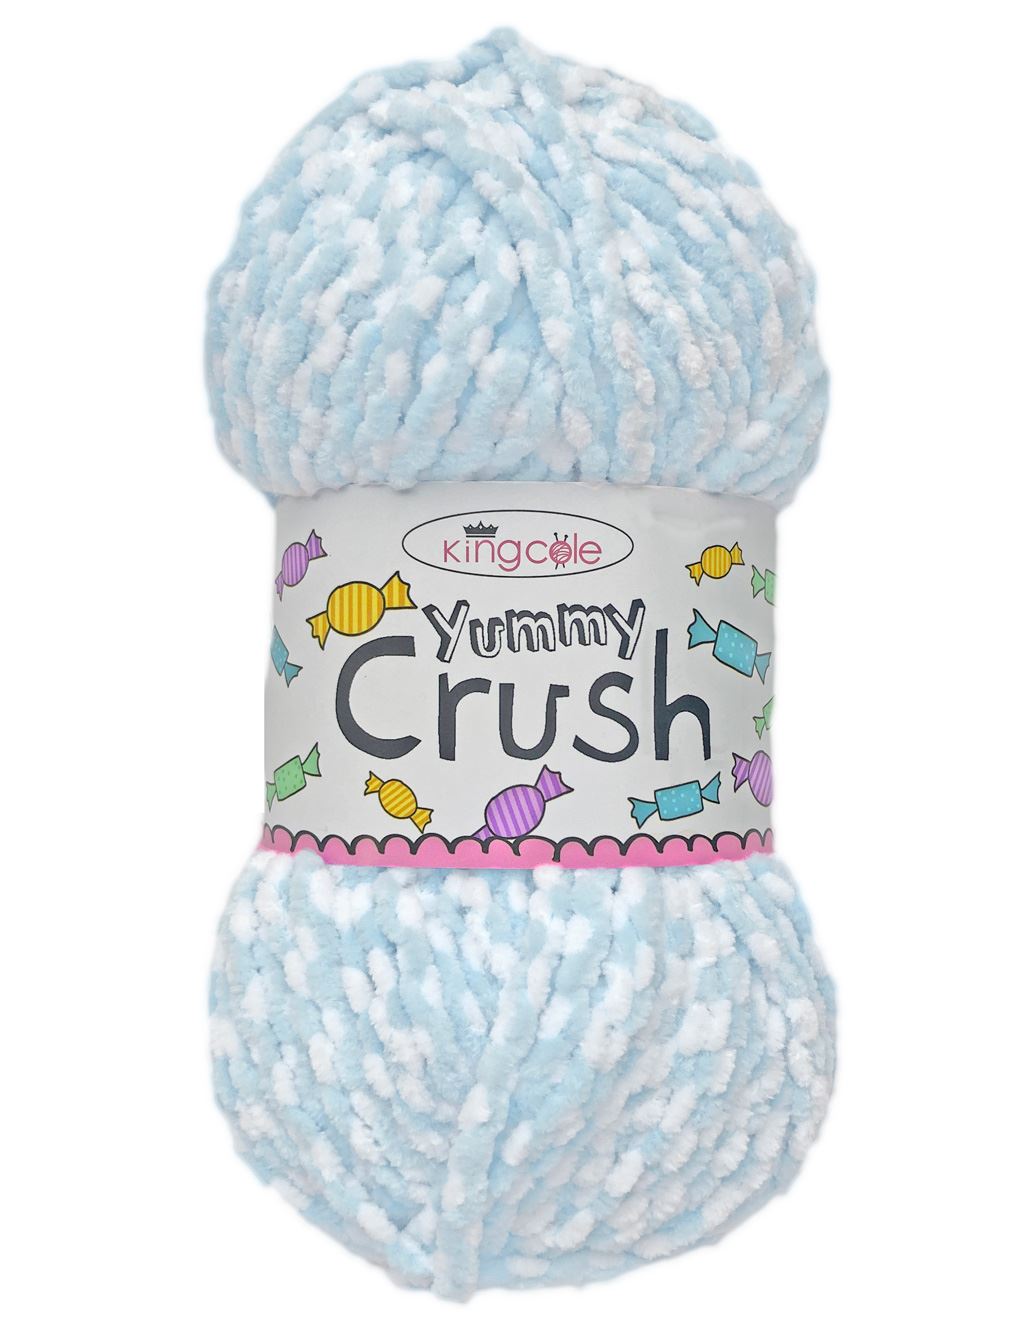 King Cole Yummy Crush Cotton Candy (4586) chenille yarn - 100g